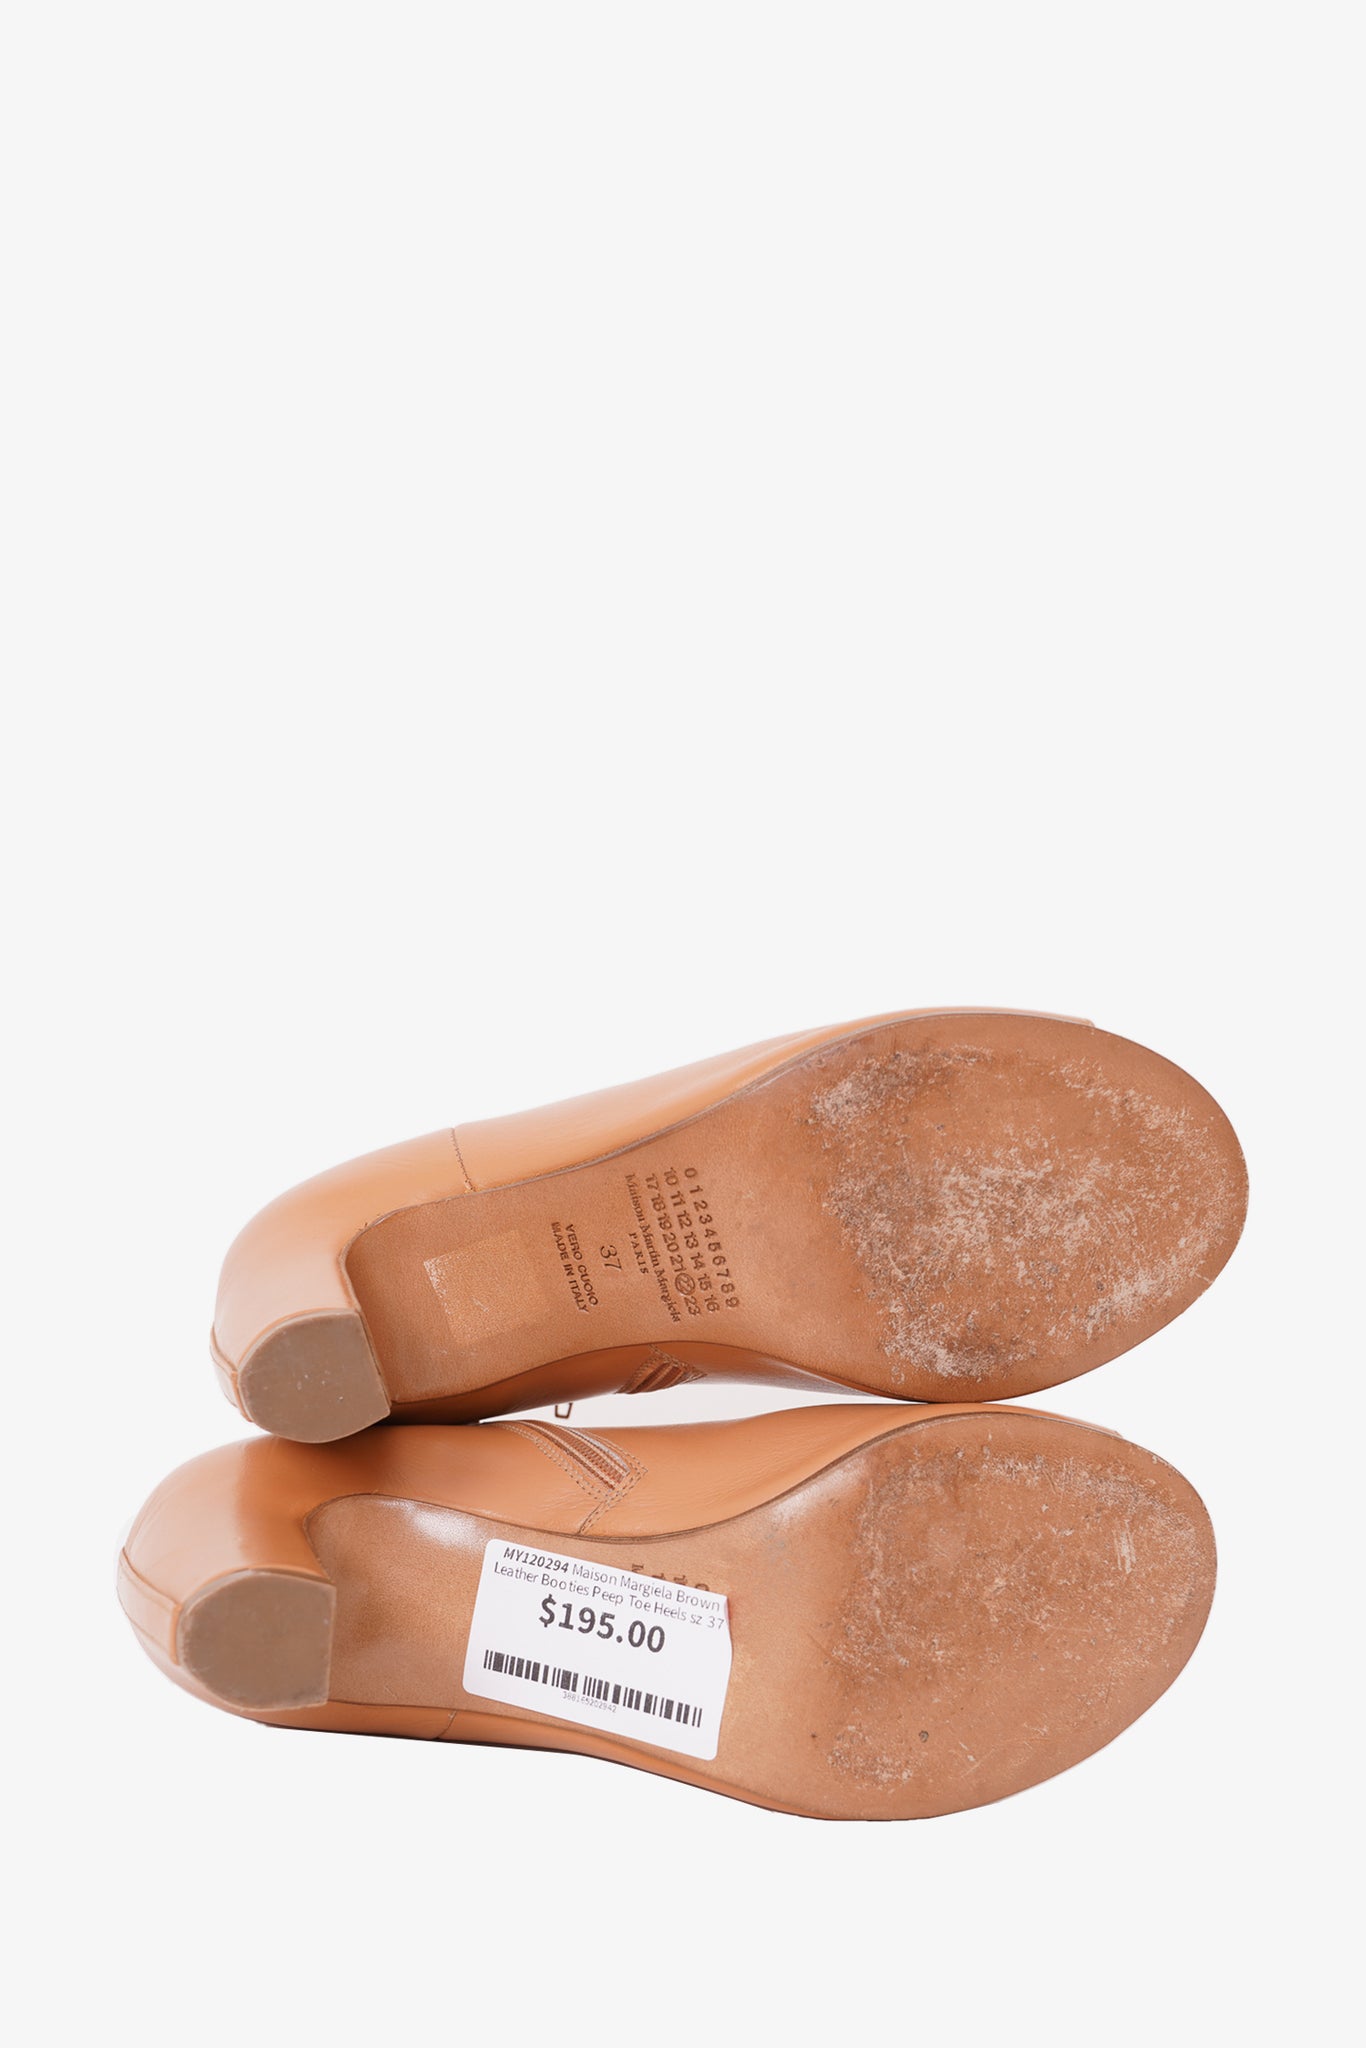 Maison Margiela Brown Leather Booties Peep Toe Heels Size 37